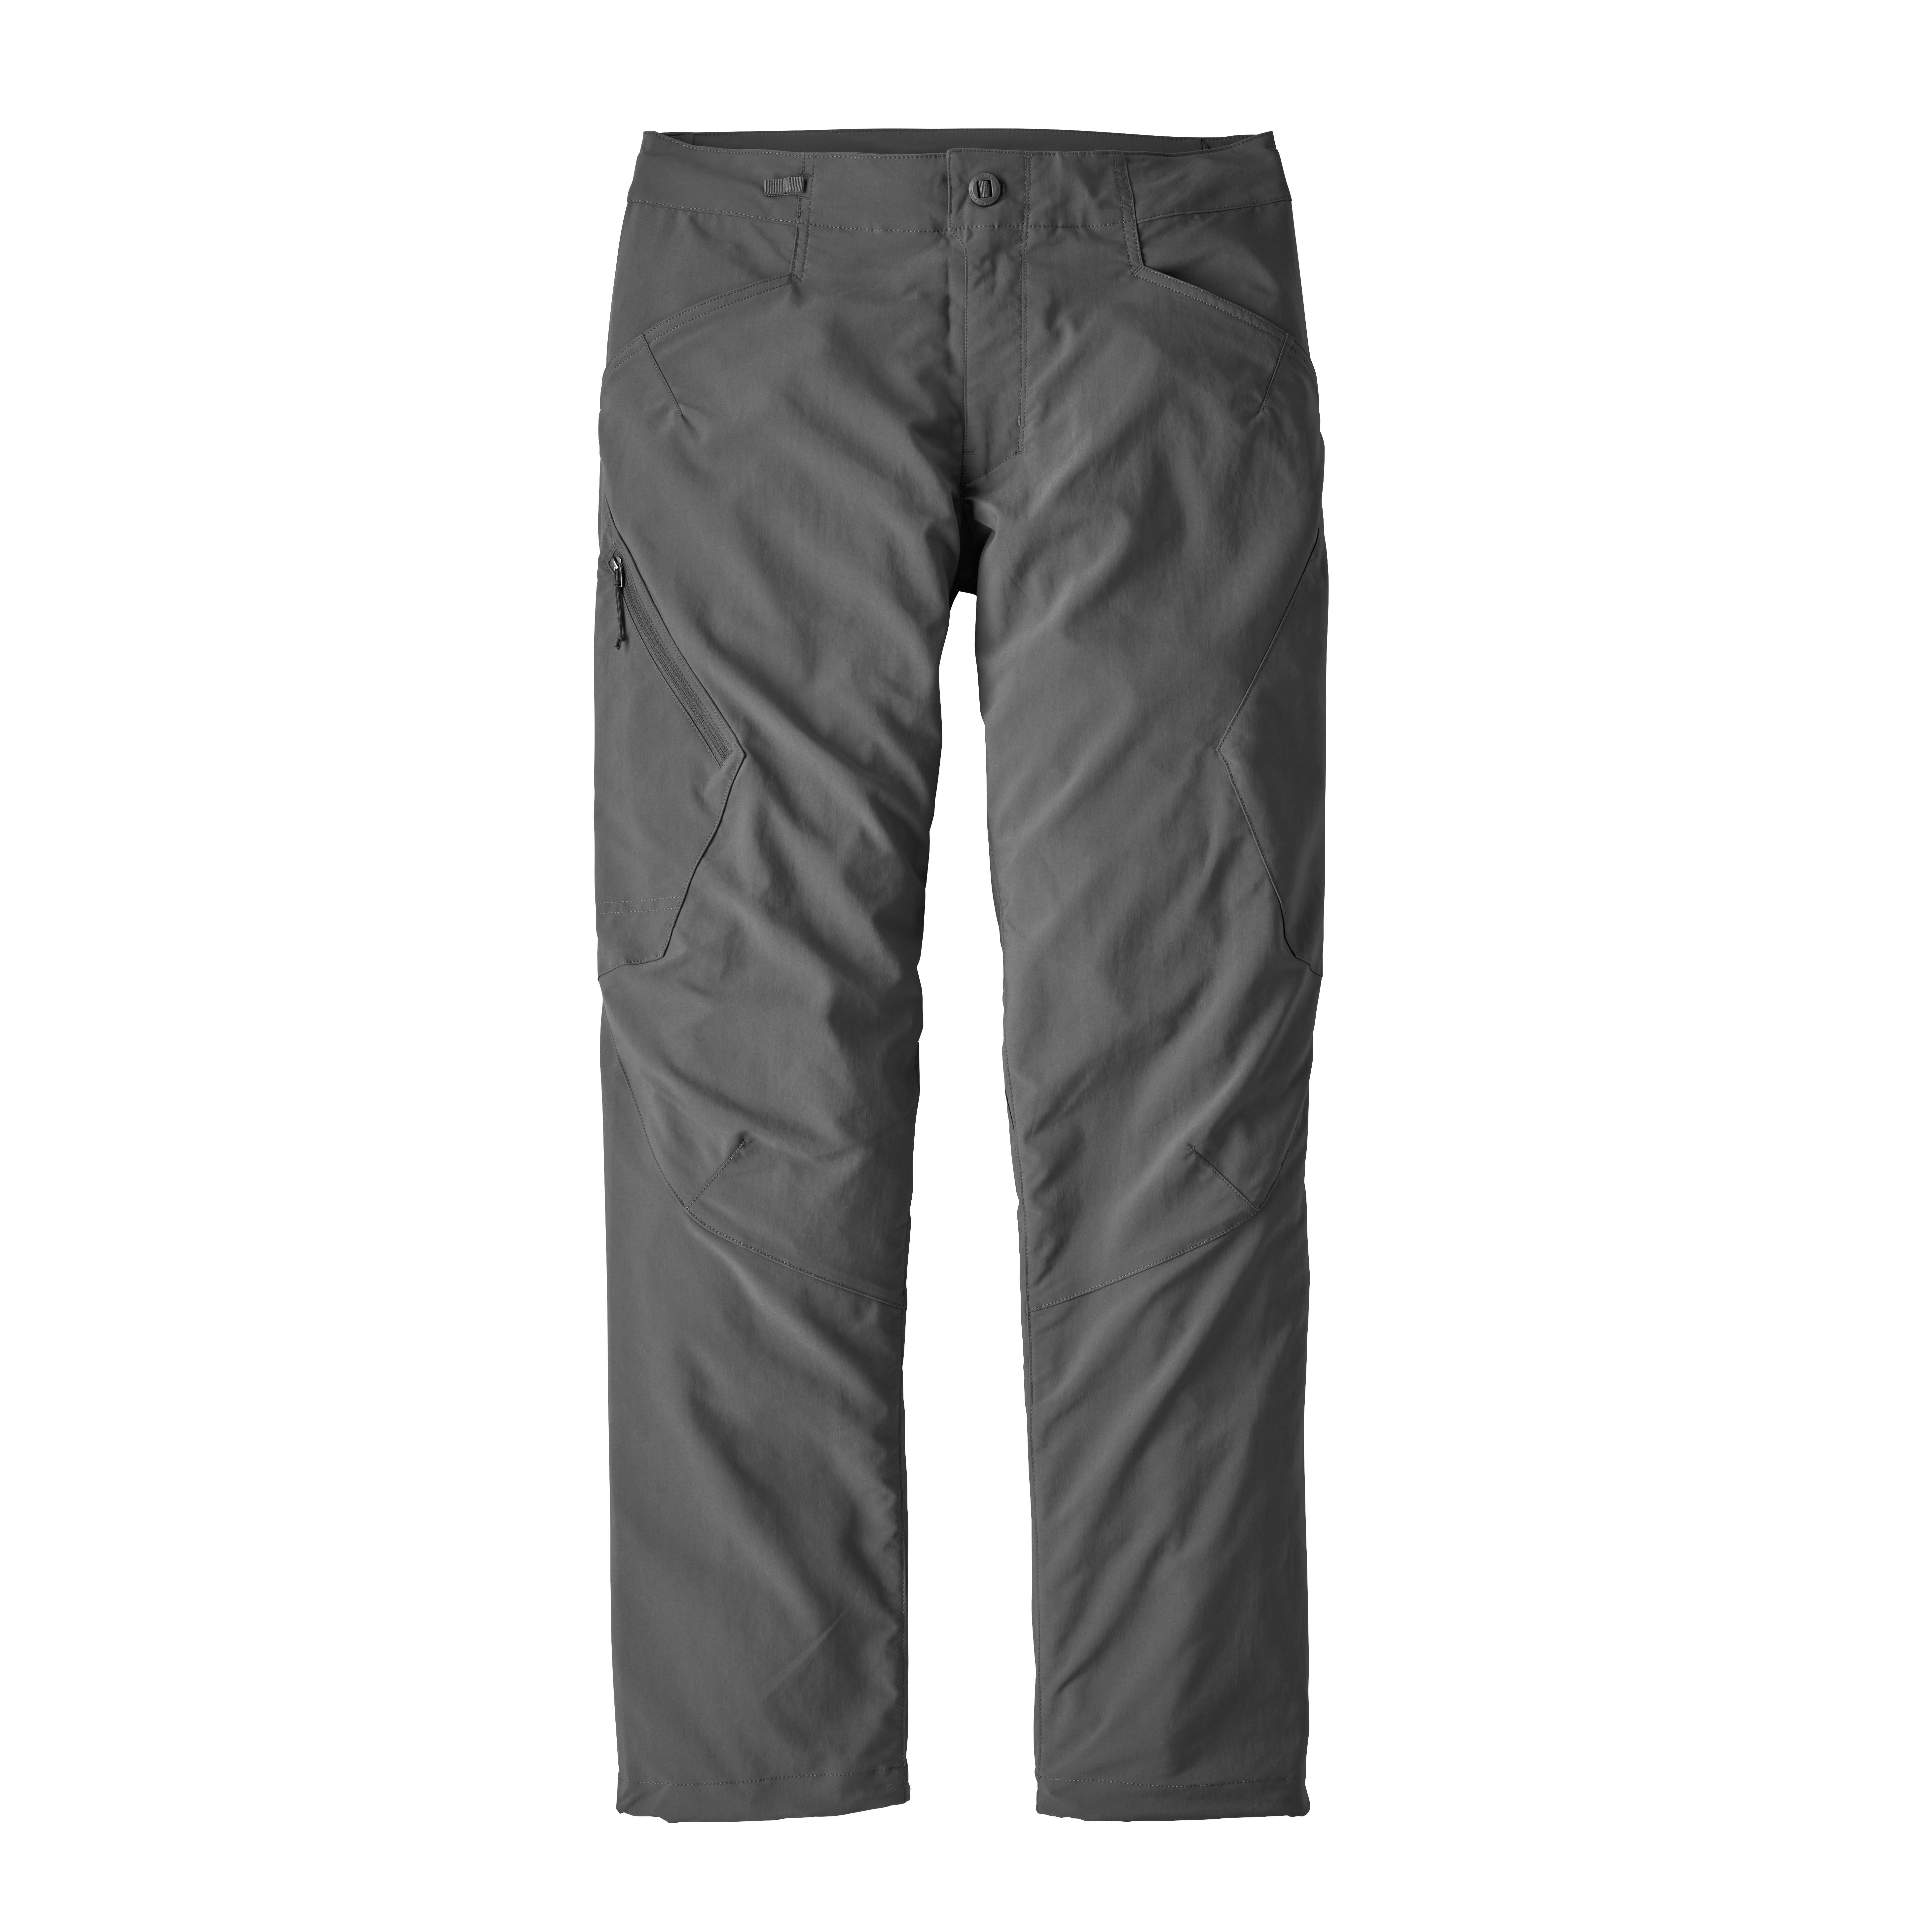 Patagonia - RPS Rock Pants - Pantaloni da arrampicatas - Uomo